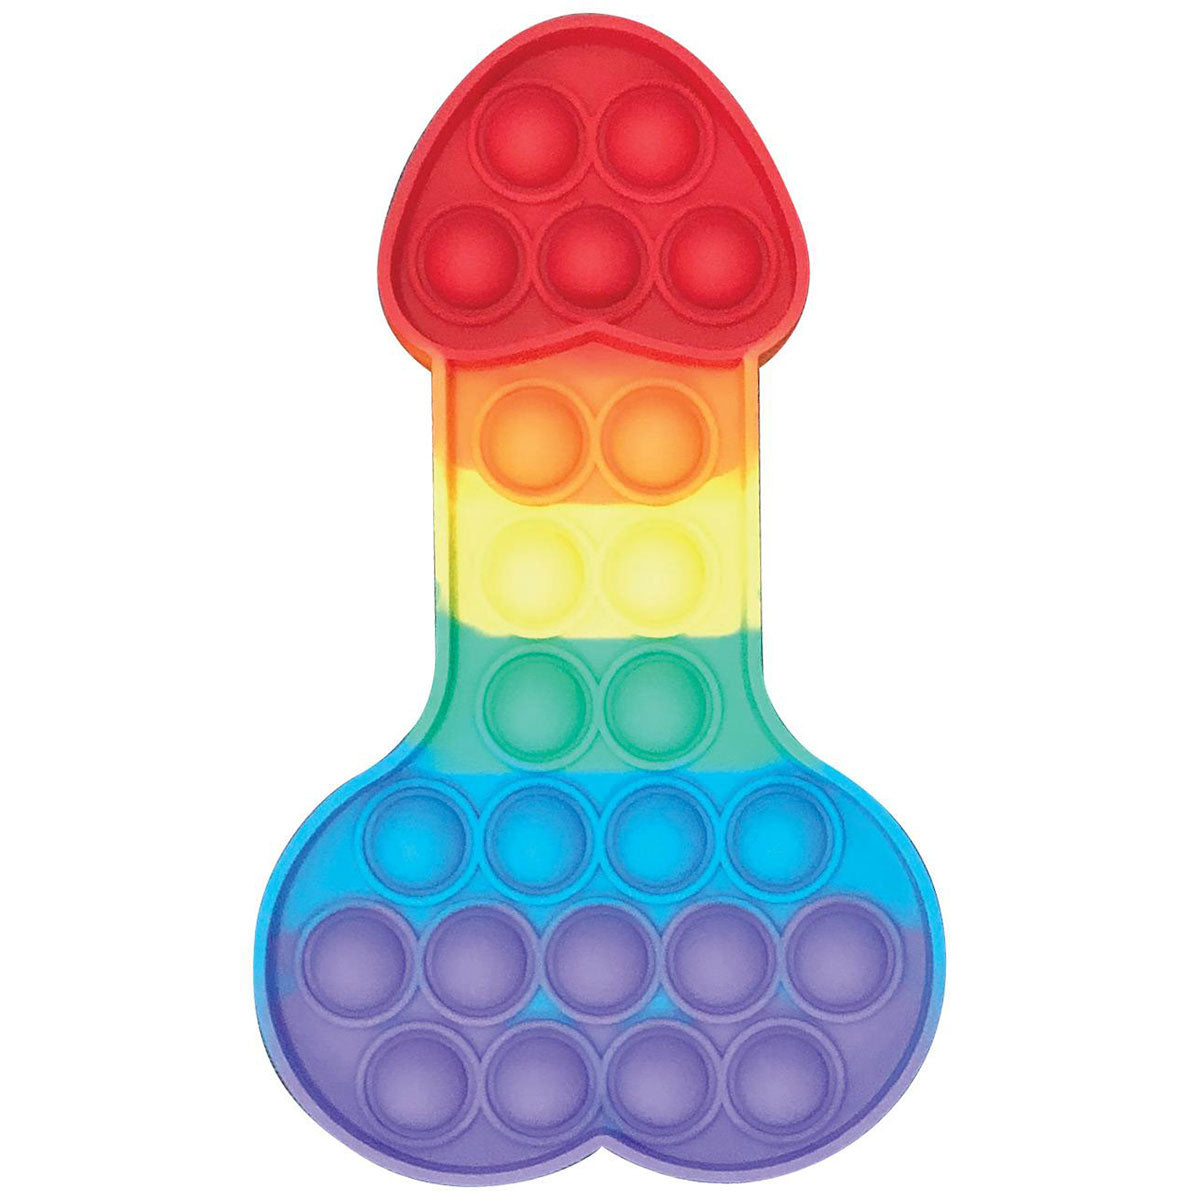 Penis Pop-It Toy